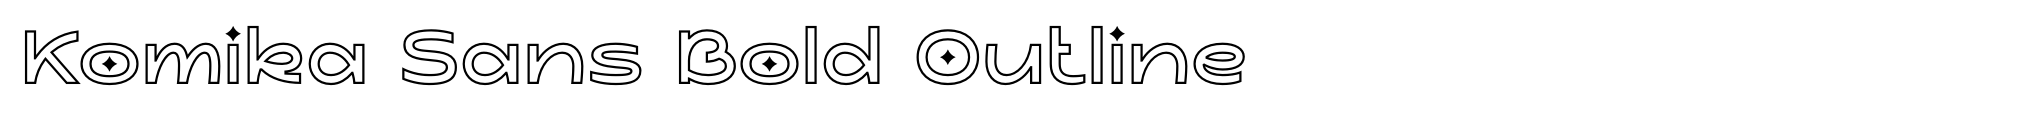 Komika Sans Bold Outline image